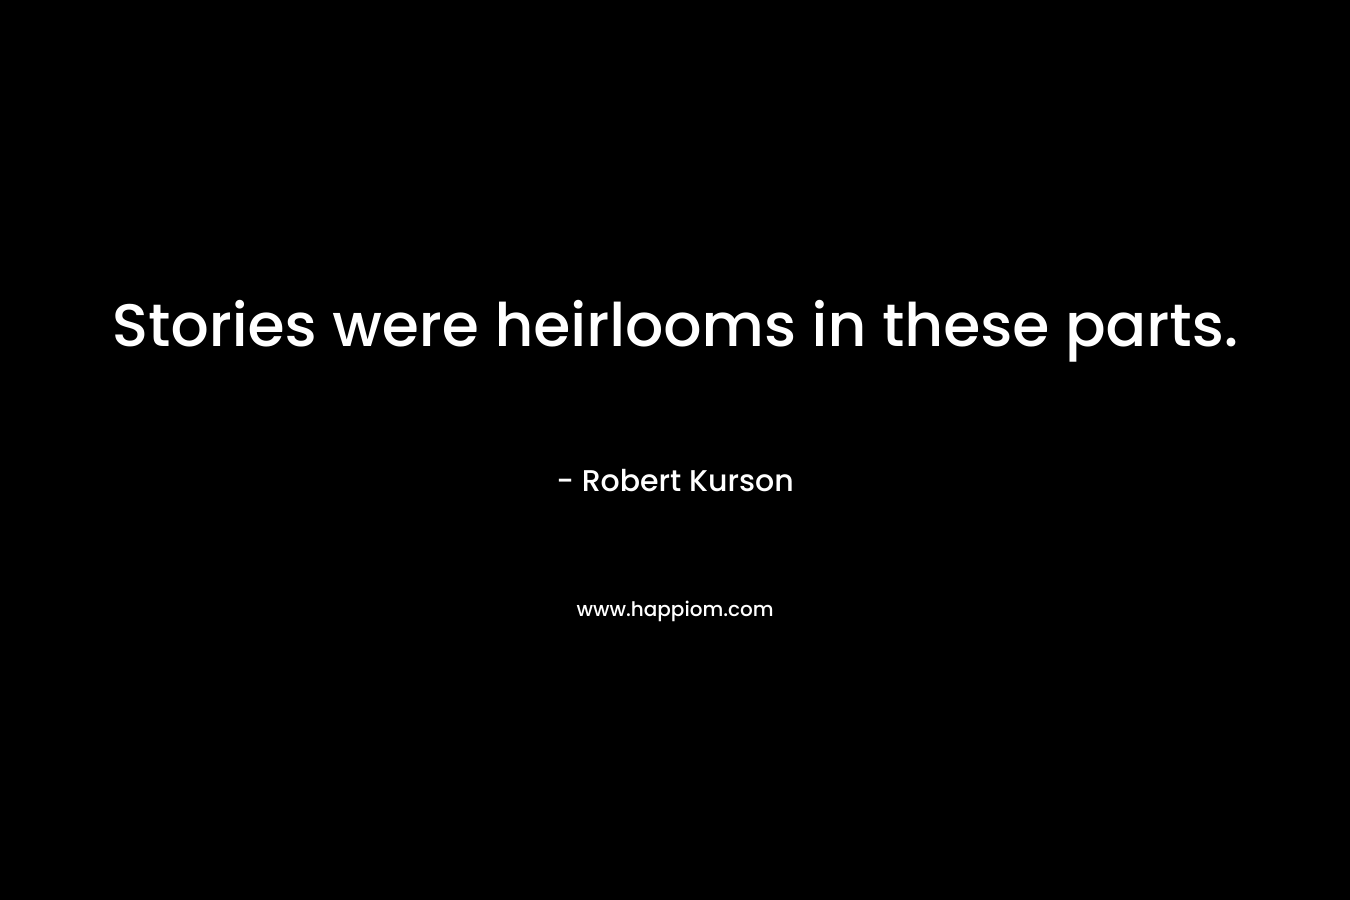 Stories were heirlooms in these parts. – Robert Kurson